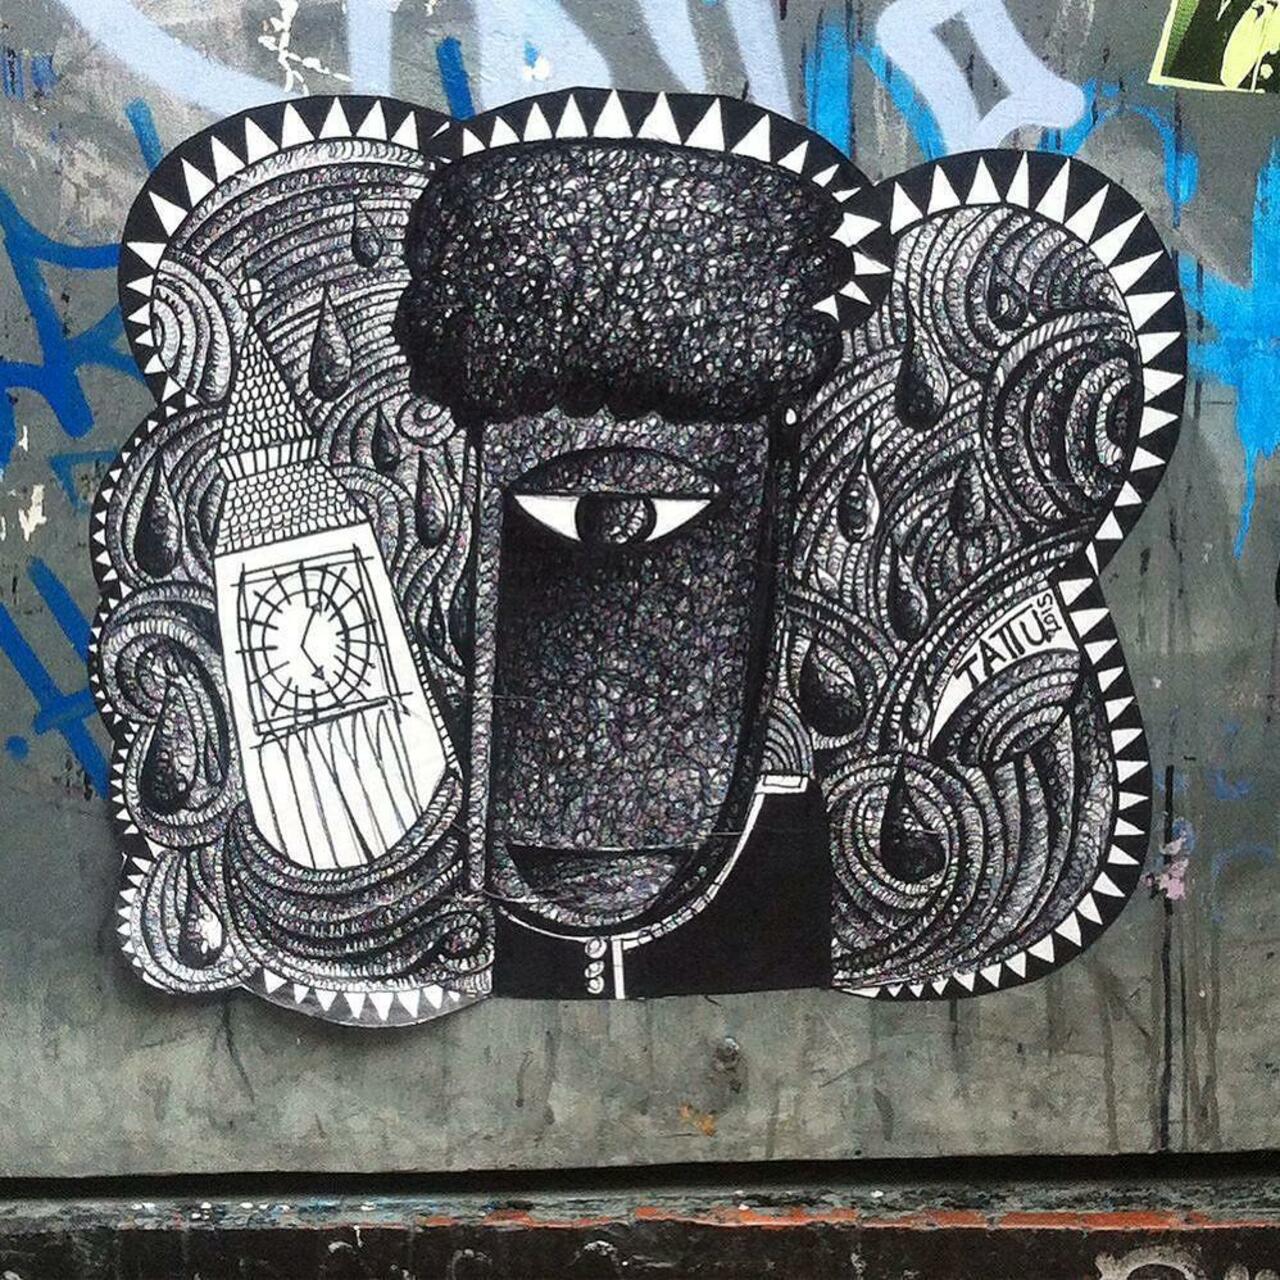 Art by Annabelle Tattu  
#Graffiti #StreetArt #UrbanArt #AnnabelleTattu #ChanceStreet #Shoreditch #London #iPhone4… http://t.co/YzMPAkUbgE